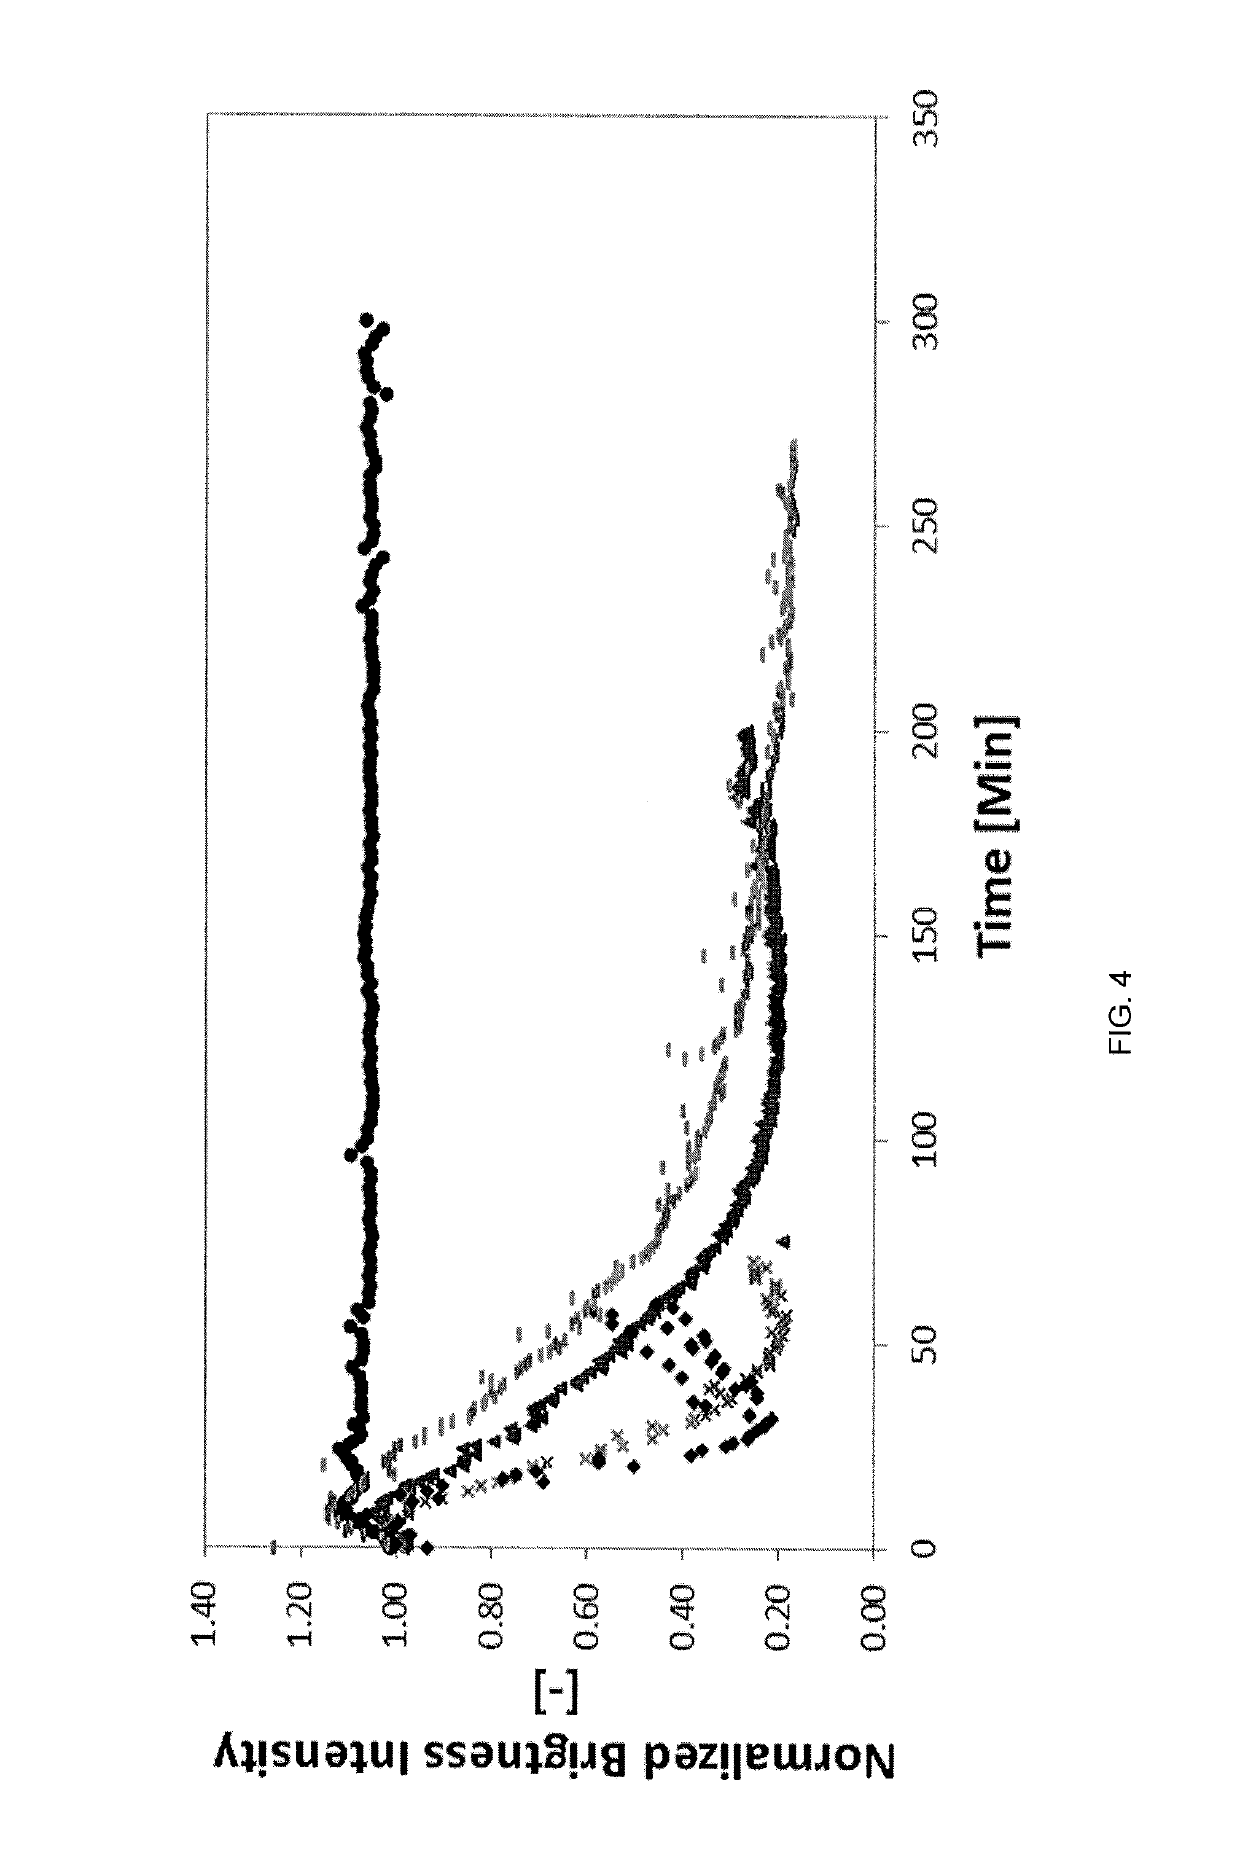 In situ analysis of petroleum stability